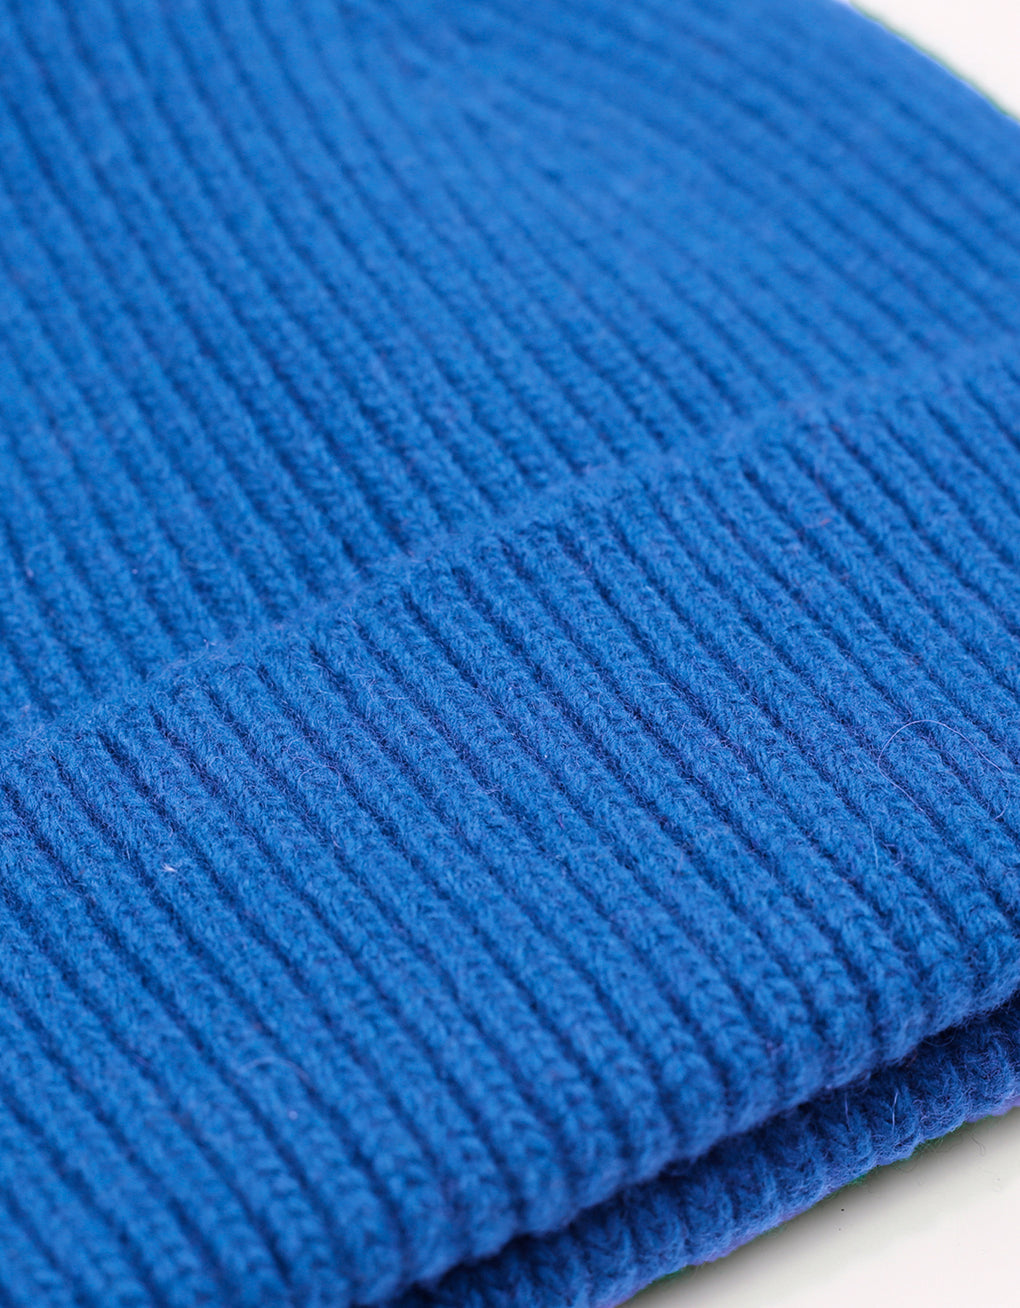 Merino wool beanie in Pacific Blue